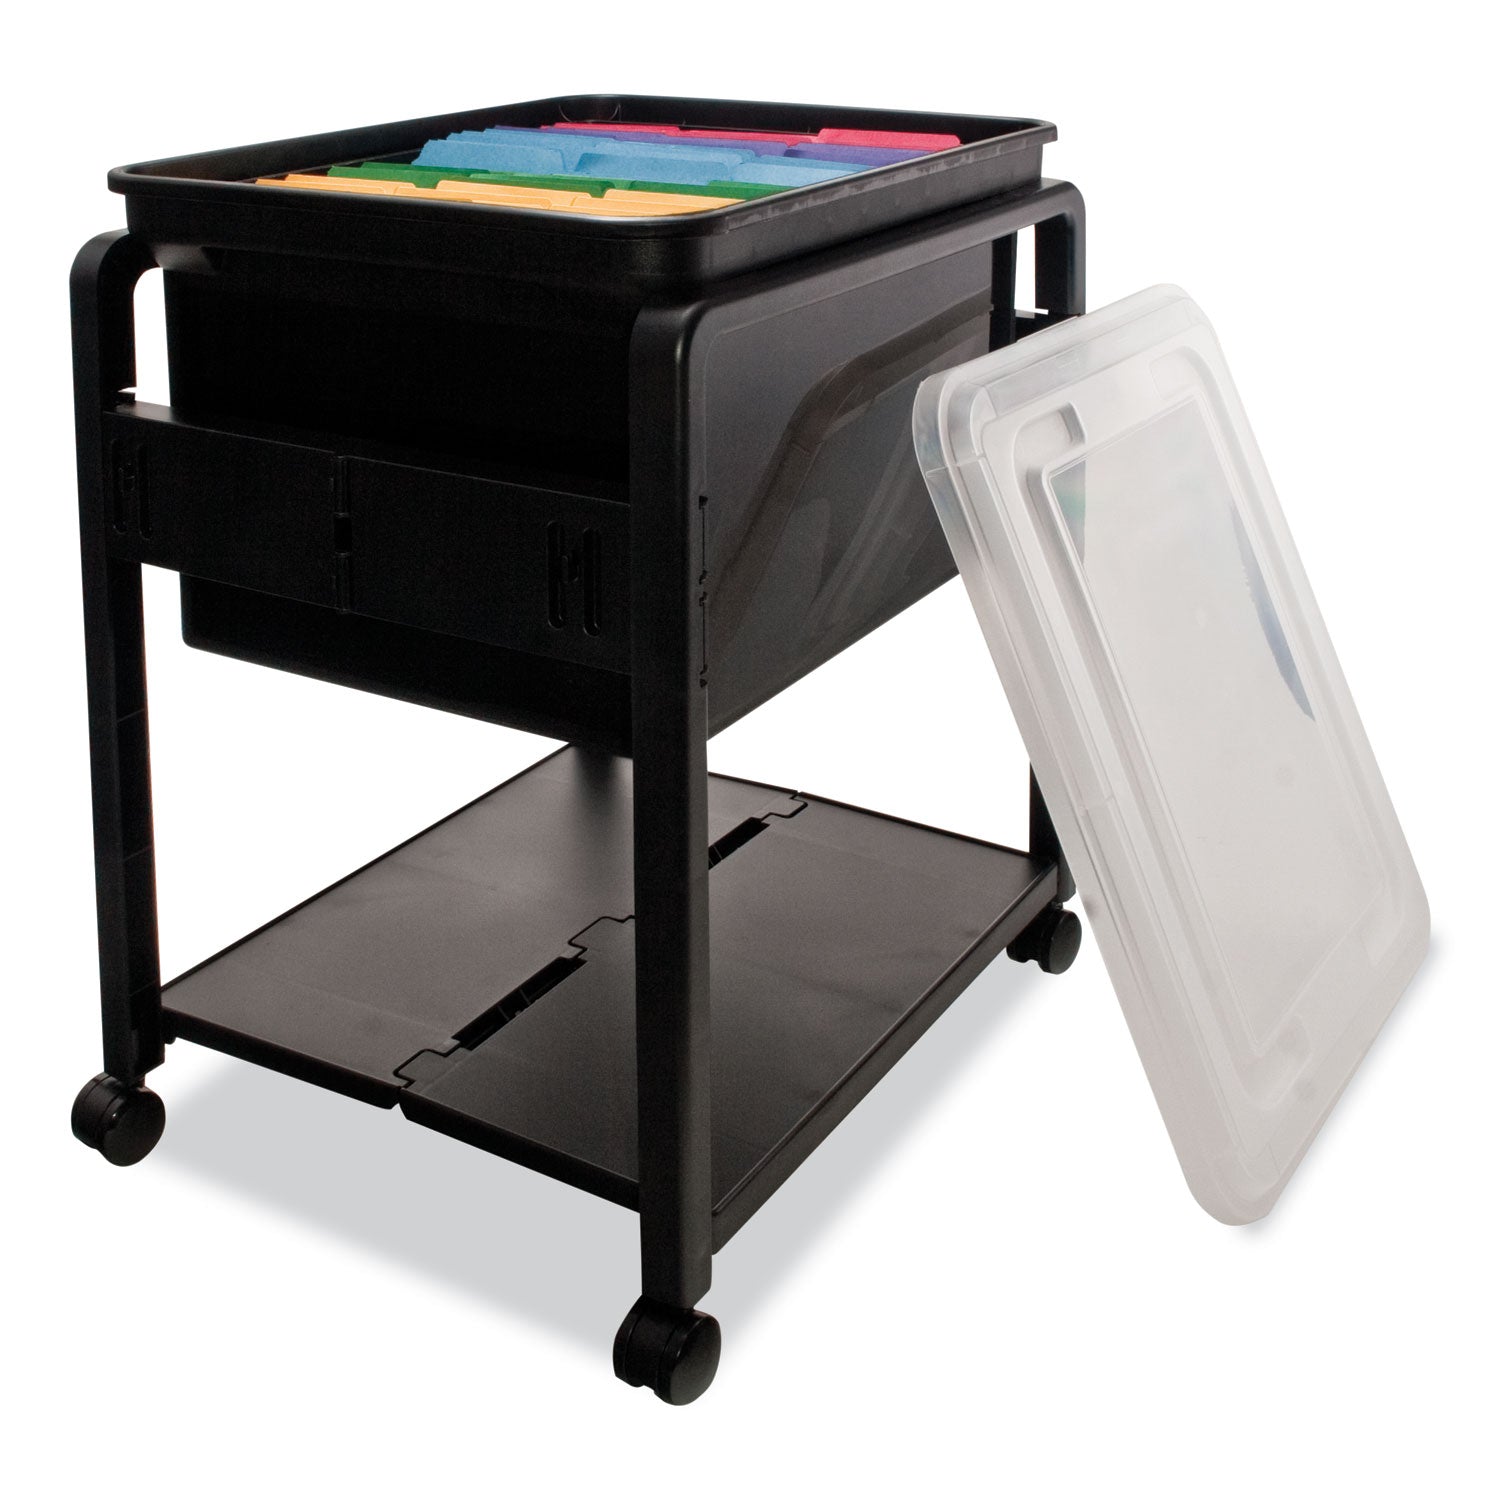 Folding Mobile File Cart, Plastic, 1 Shelf, 1 Bin, 14.5" x 18.5" x 21.75", Black - 